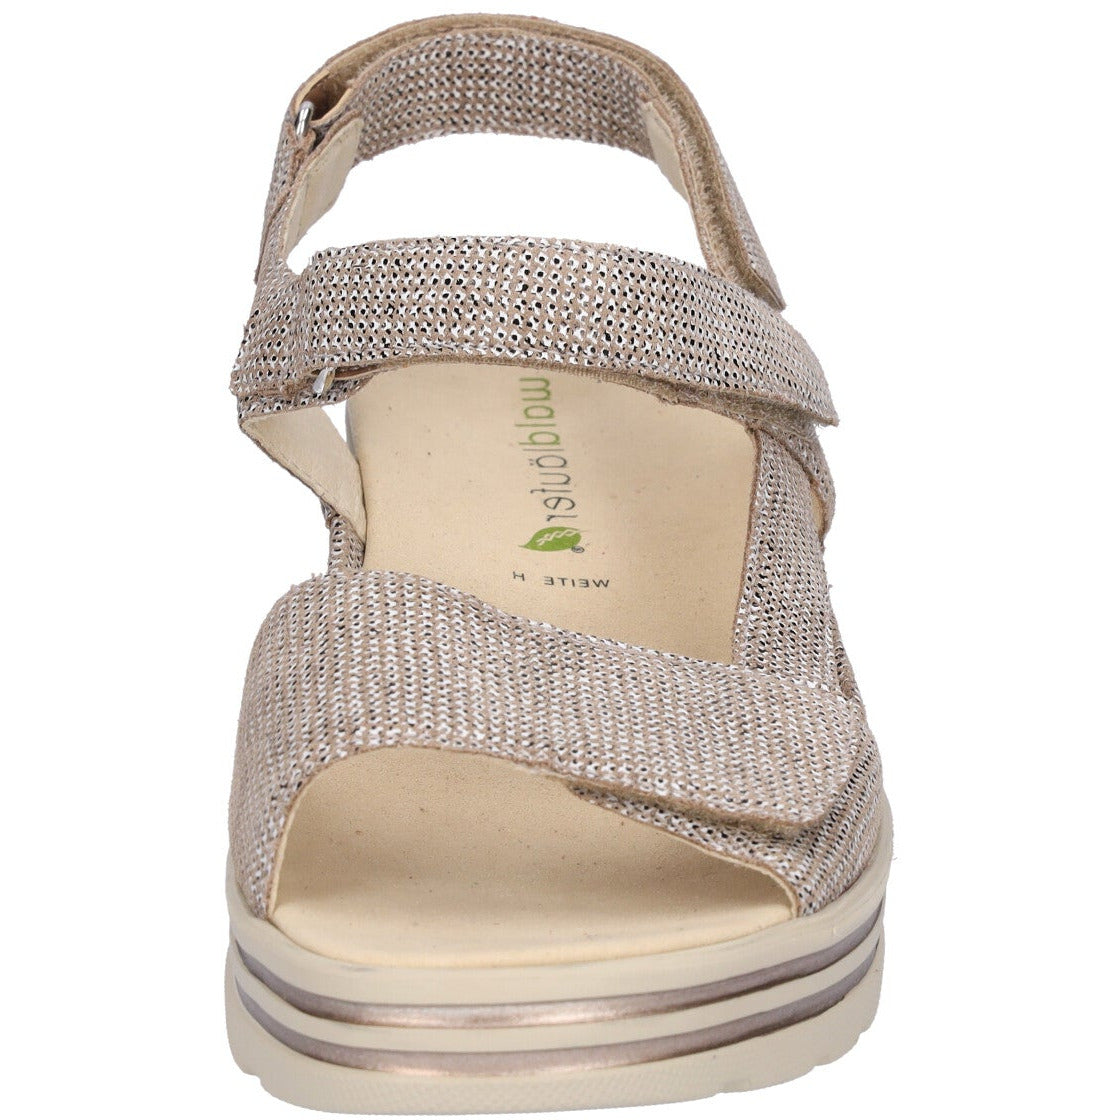 Waldlaufer H-Michelle - Ladies Low Wedge Sandal in Beige Pattern. Waldlaufer  | Wide Fit Shoes | Wisemans | Bantry | West Cork | Ireland